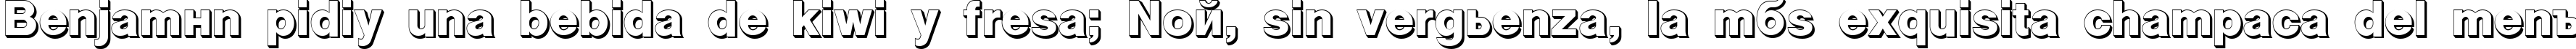 Пример написания шрифтом Cyrvetica Shadow Bold текста на испанском